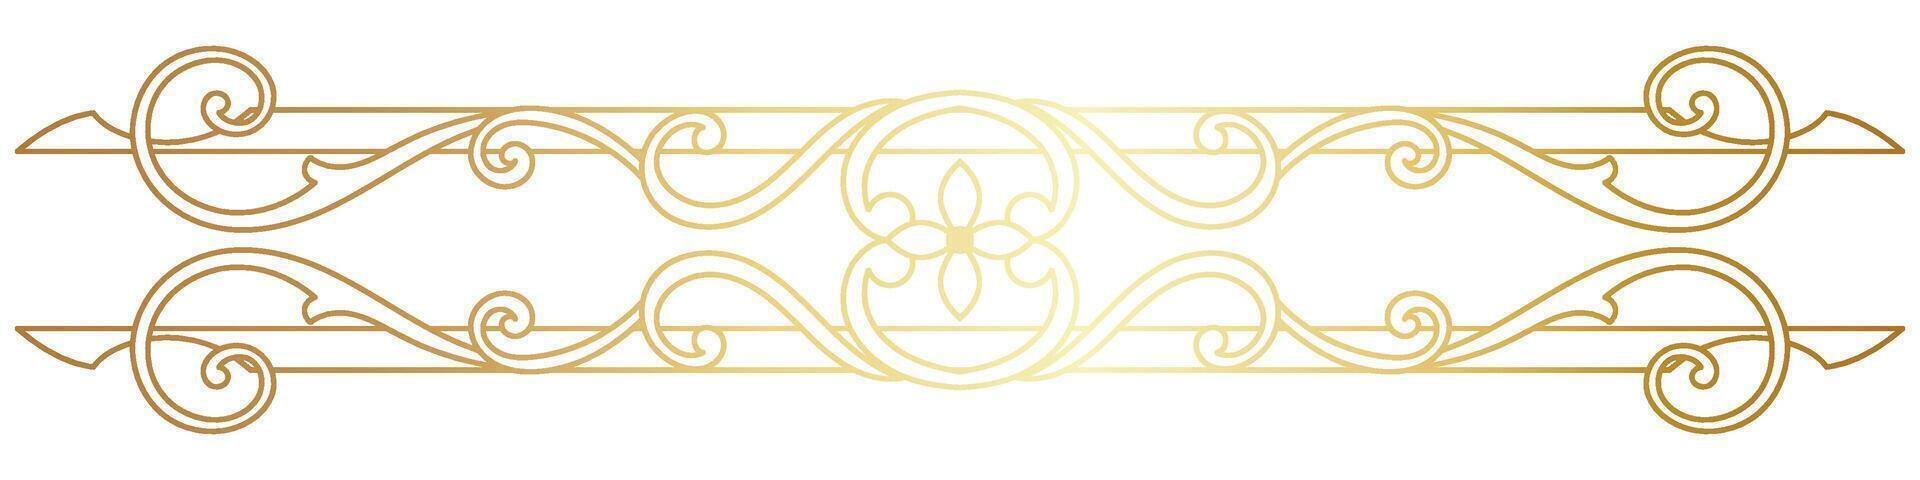 Clásico líneas decorativo elementos dorado flor frontera colección vector